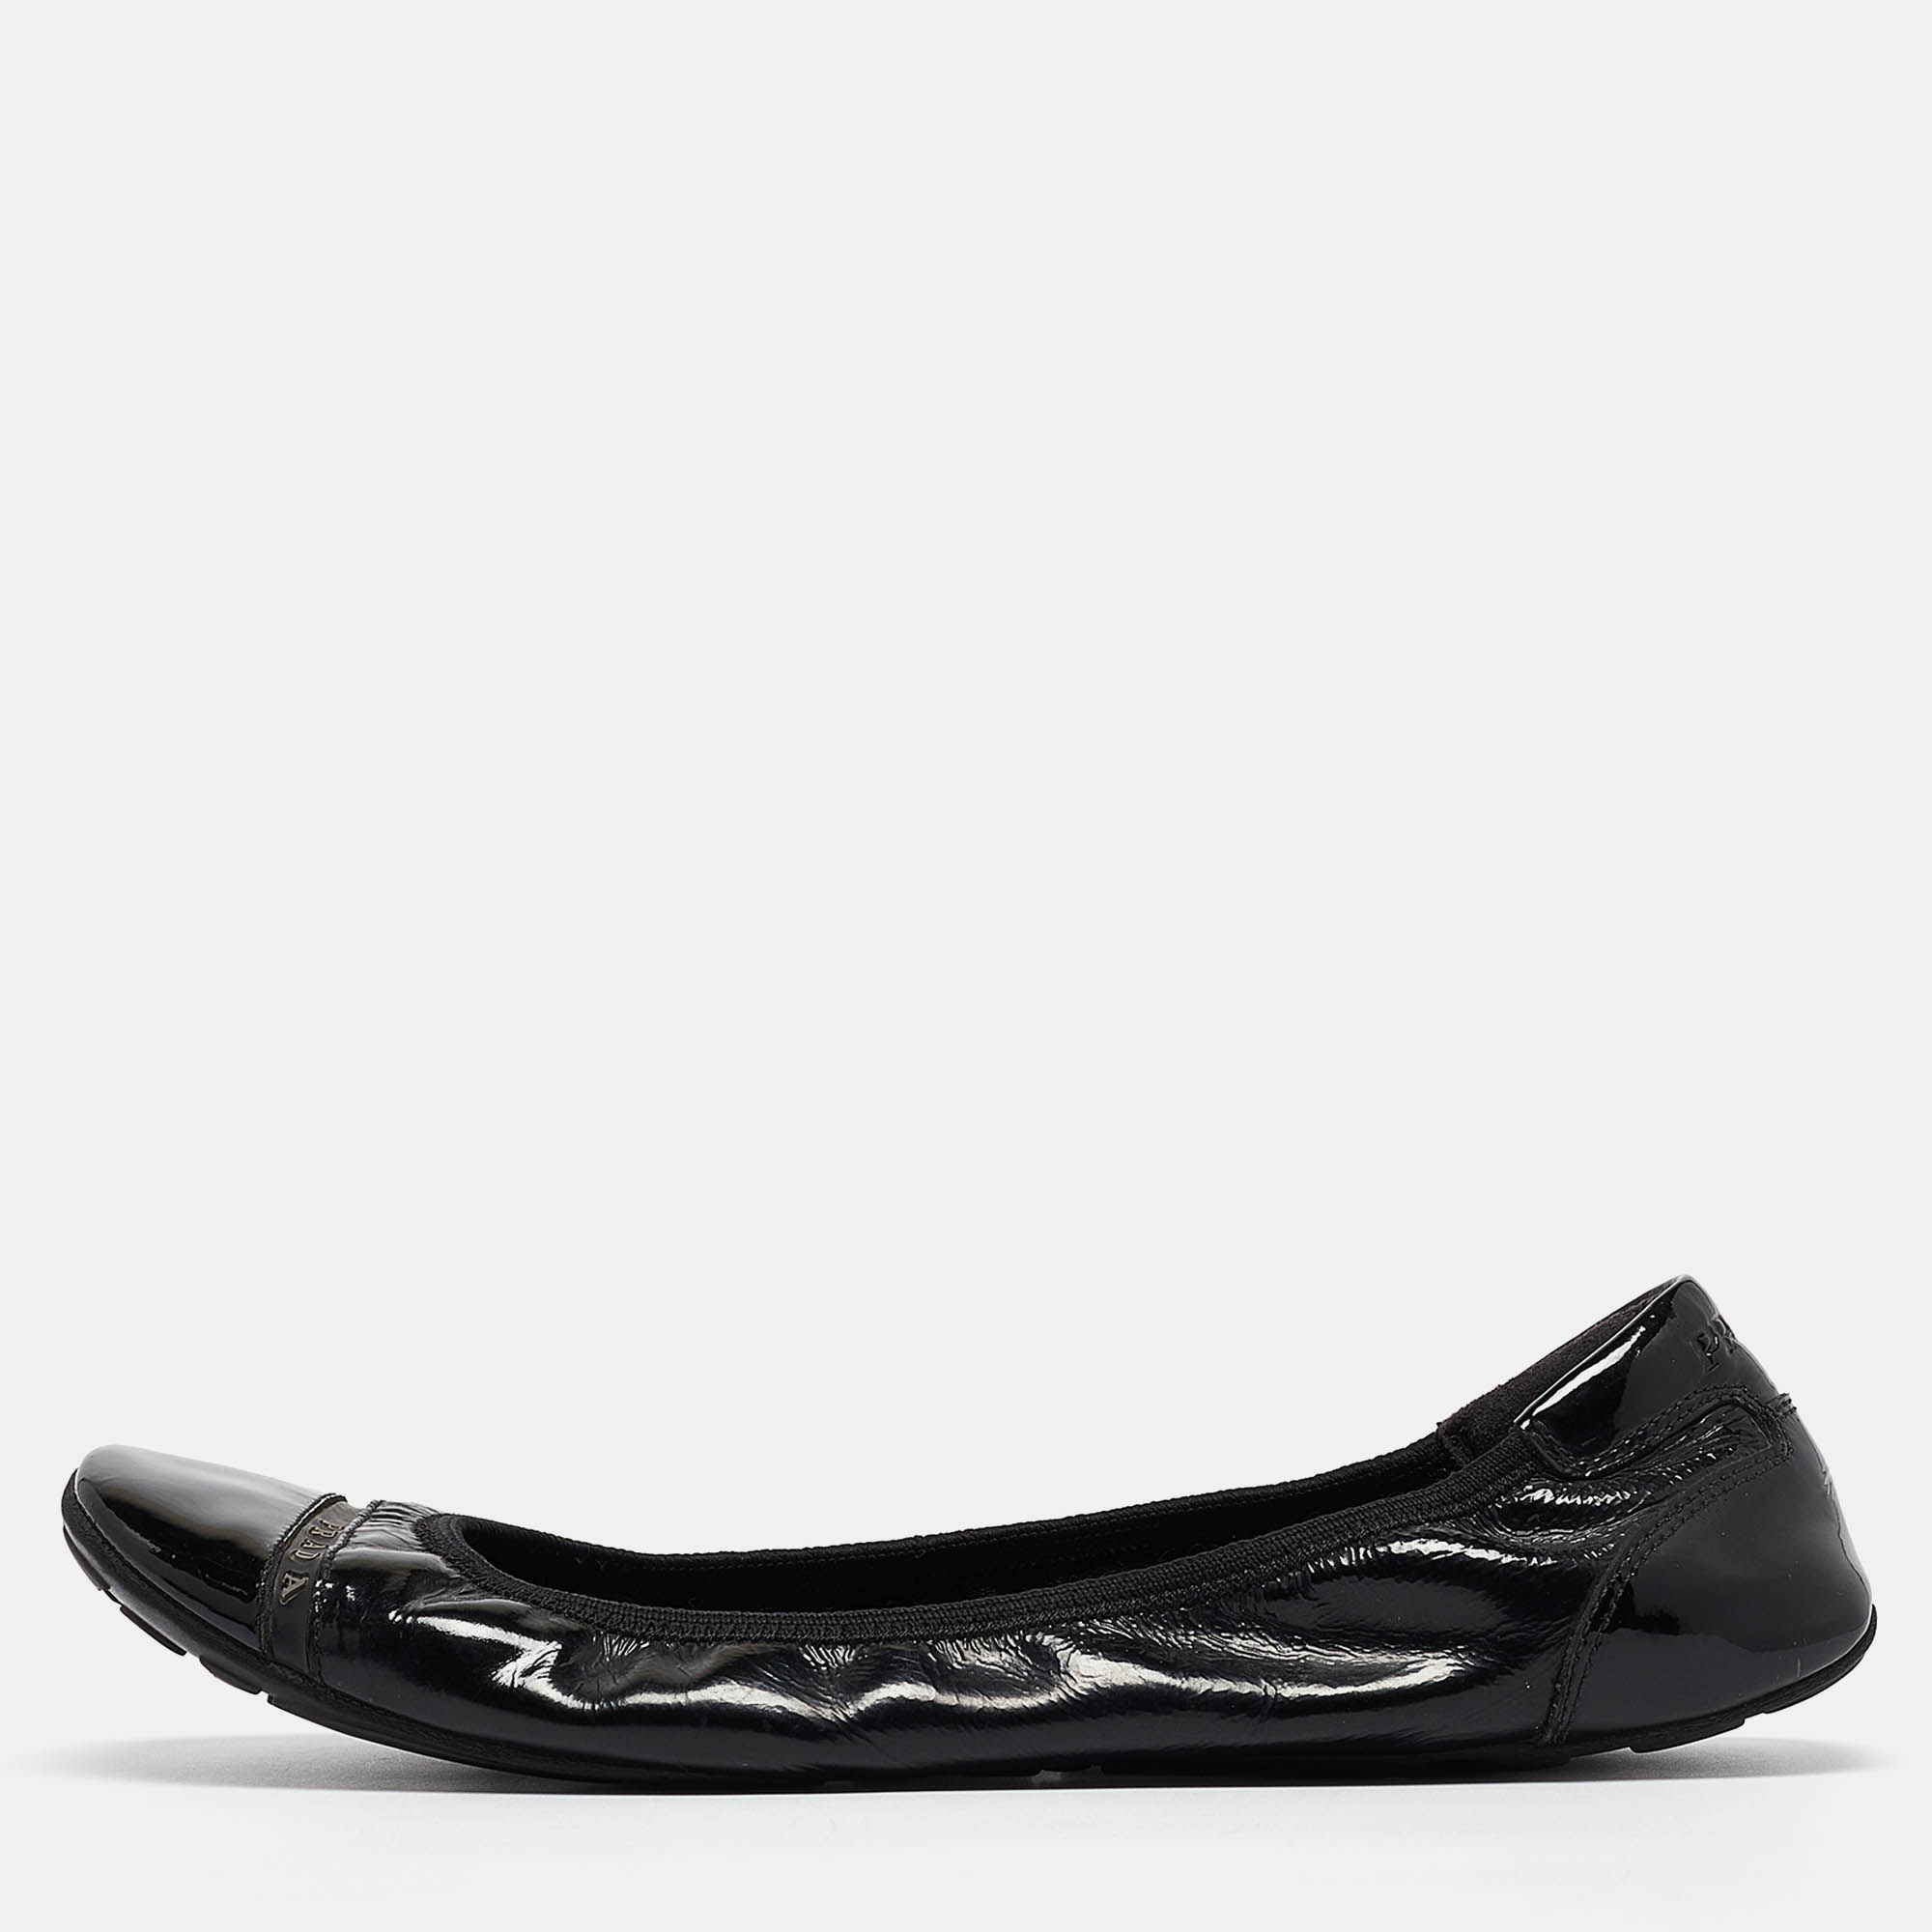 Prada sport black patent leather cap toe ballet flats size 40